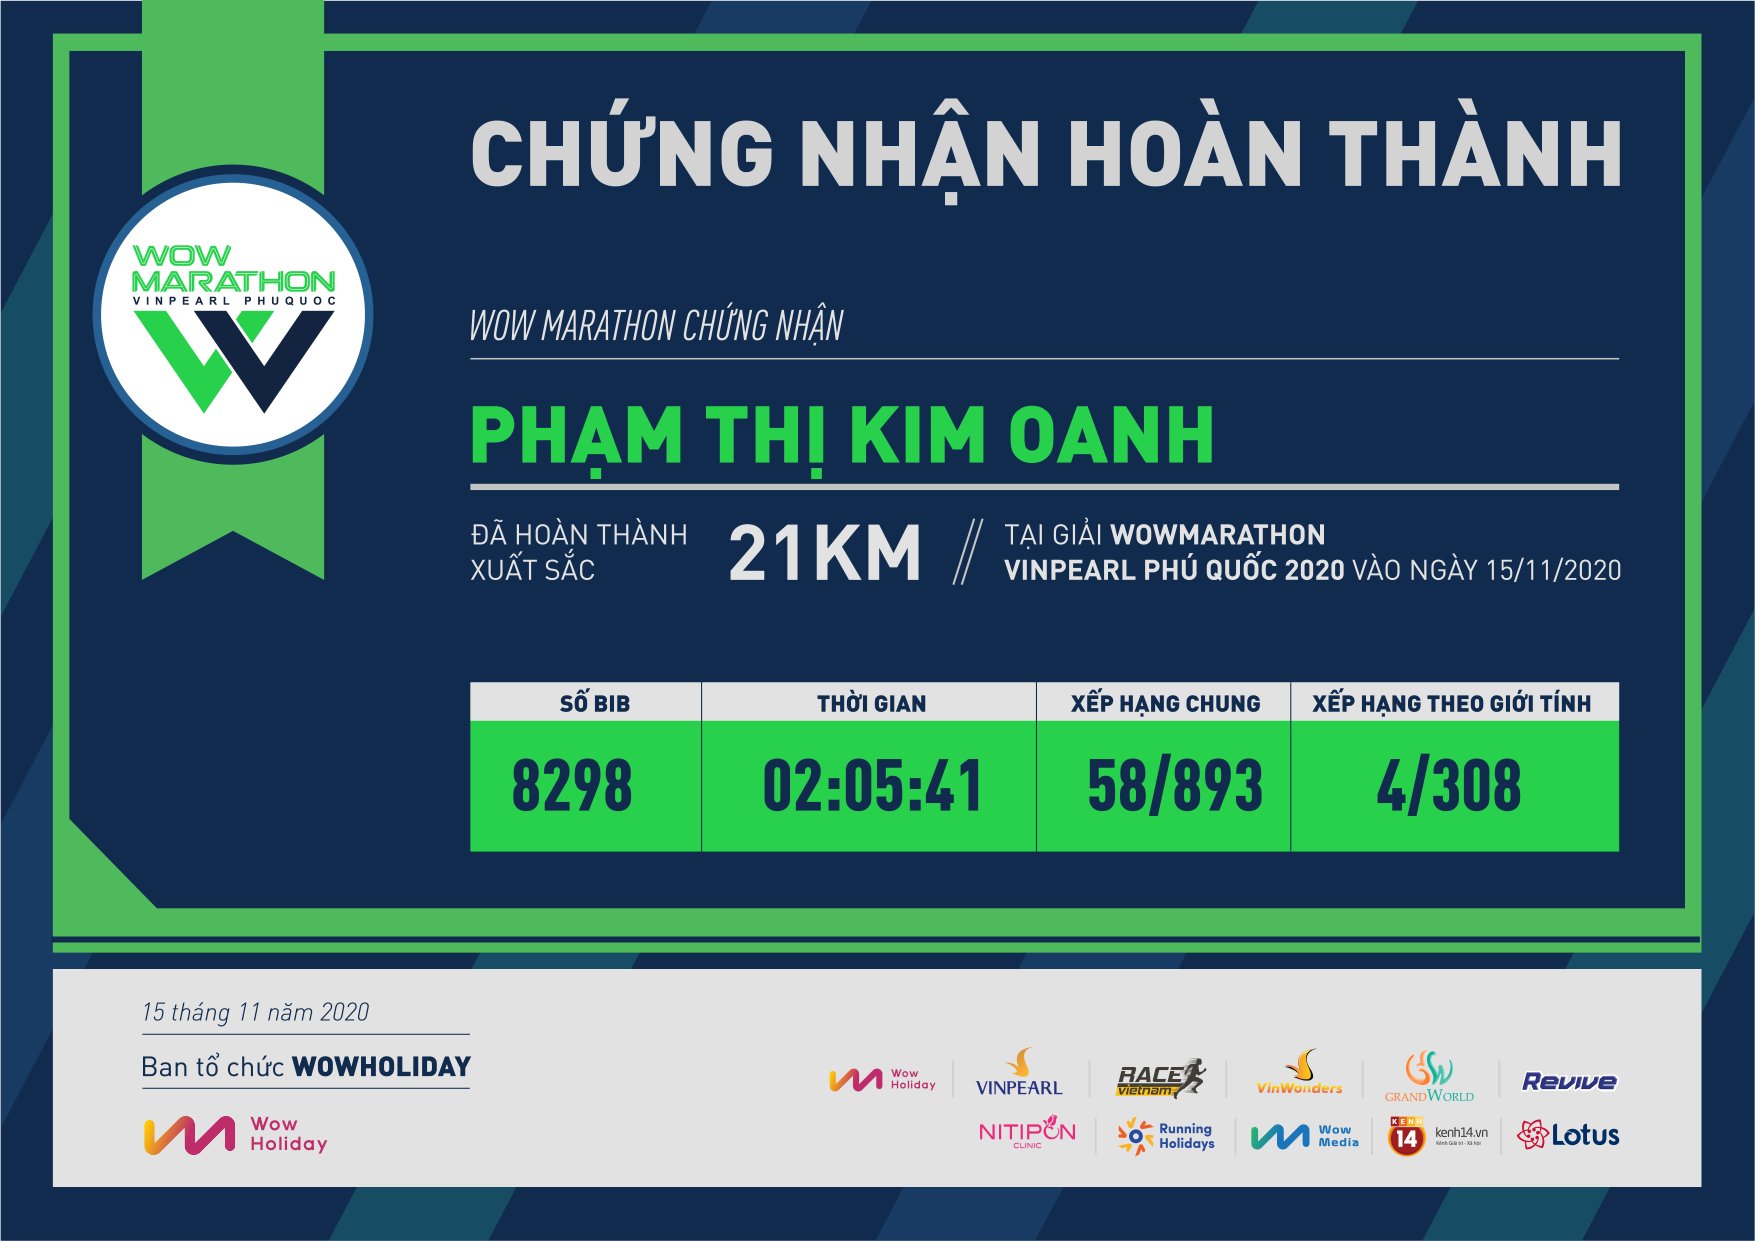 8298 - Phạm Thị Kim Oanh